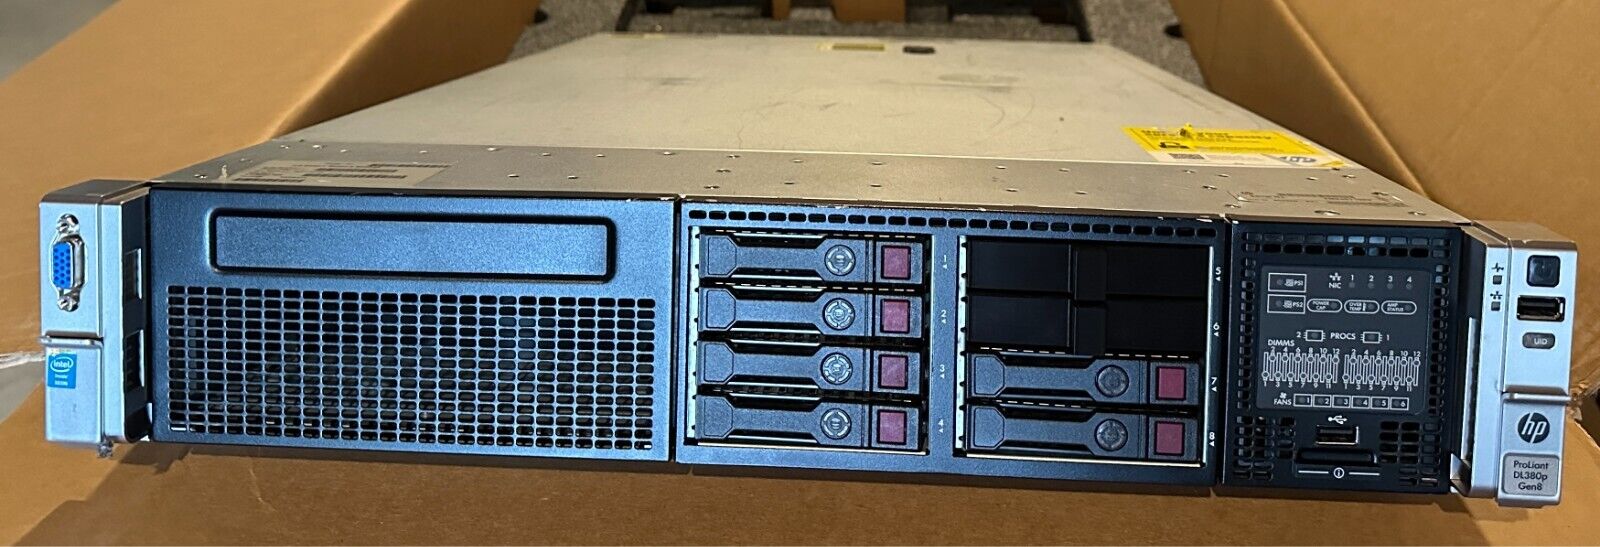 HP Proliant DL380p G8 Server 2x E5-2670 2.6ghz 16-Cores / 24GB RAM / 2x 460w